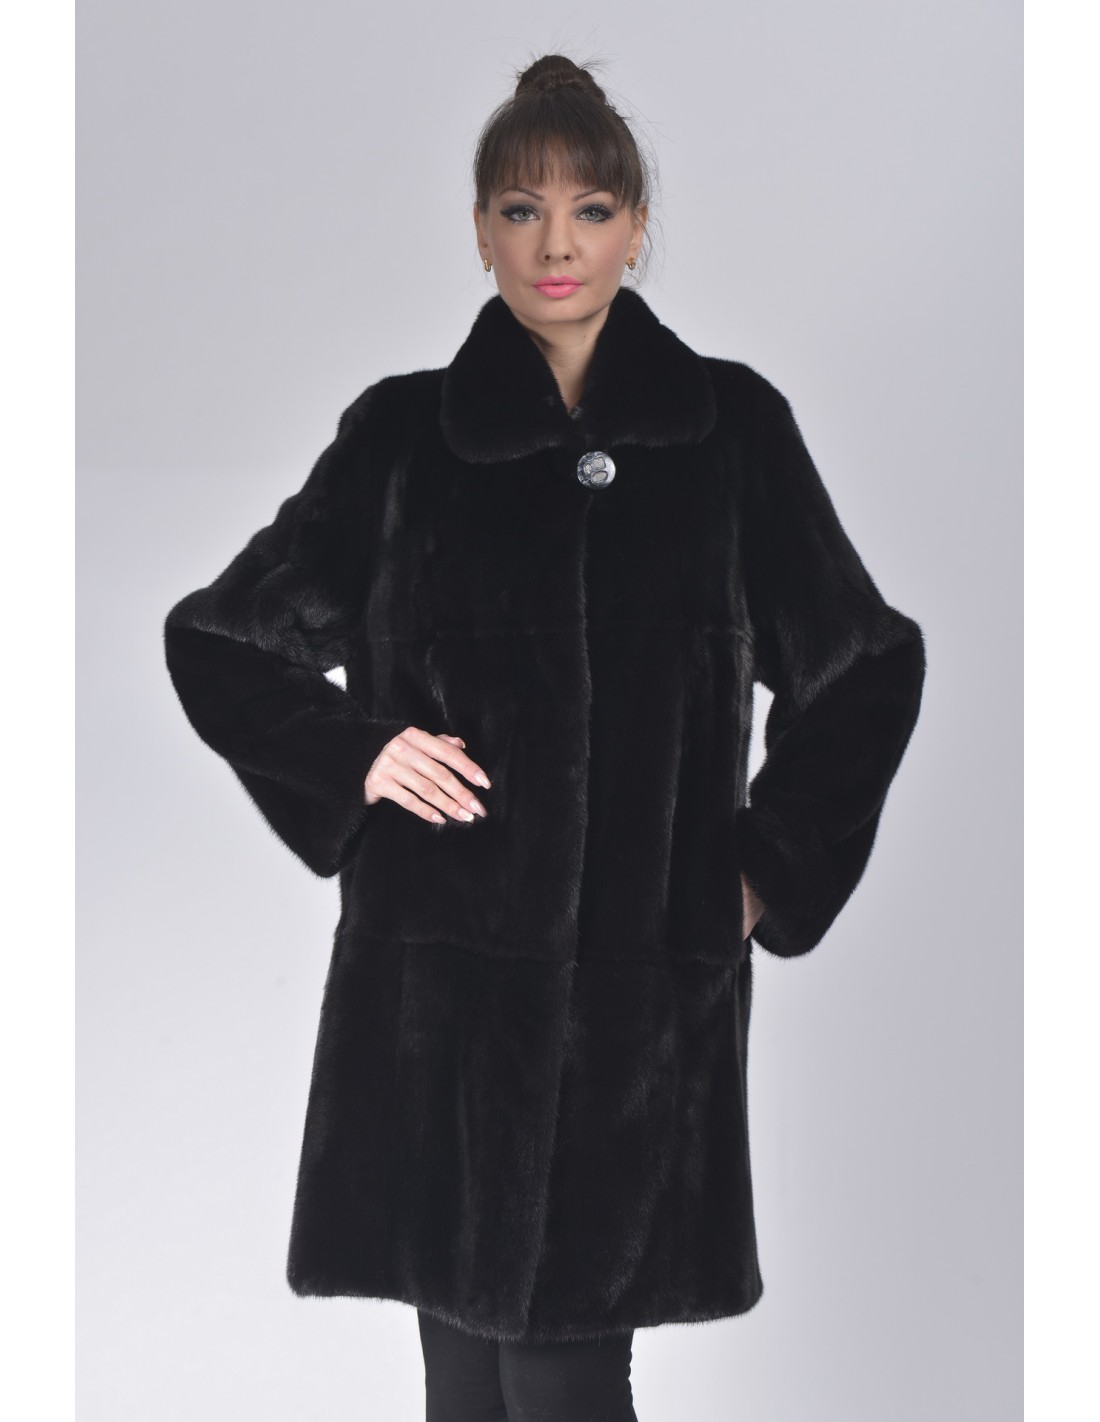 black mink fur